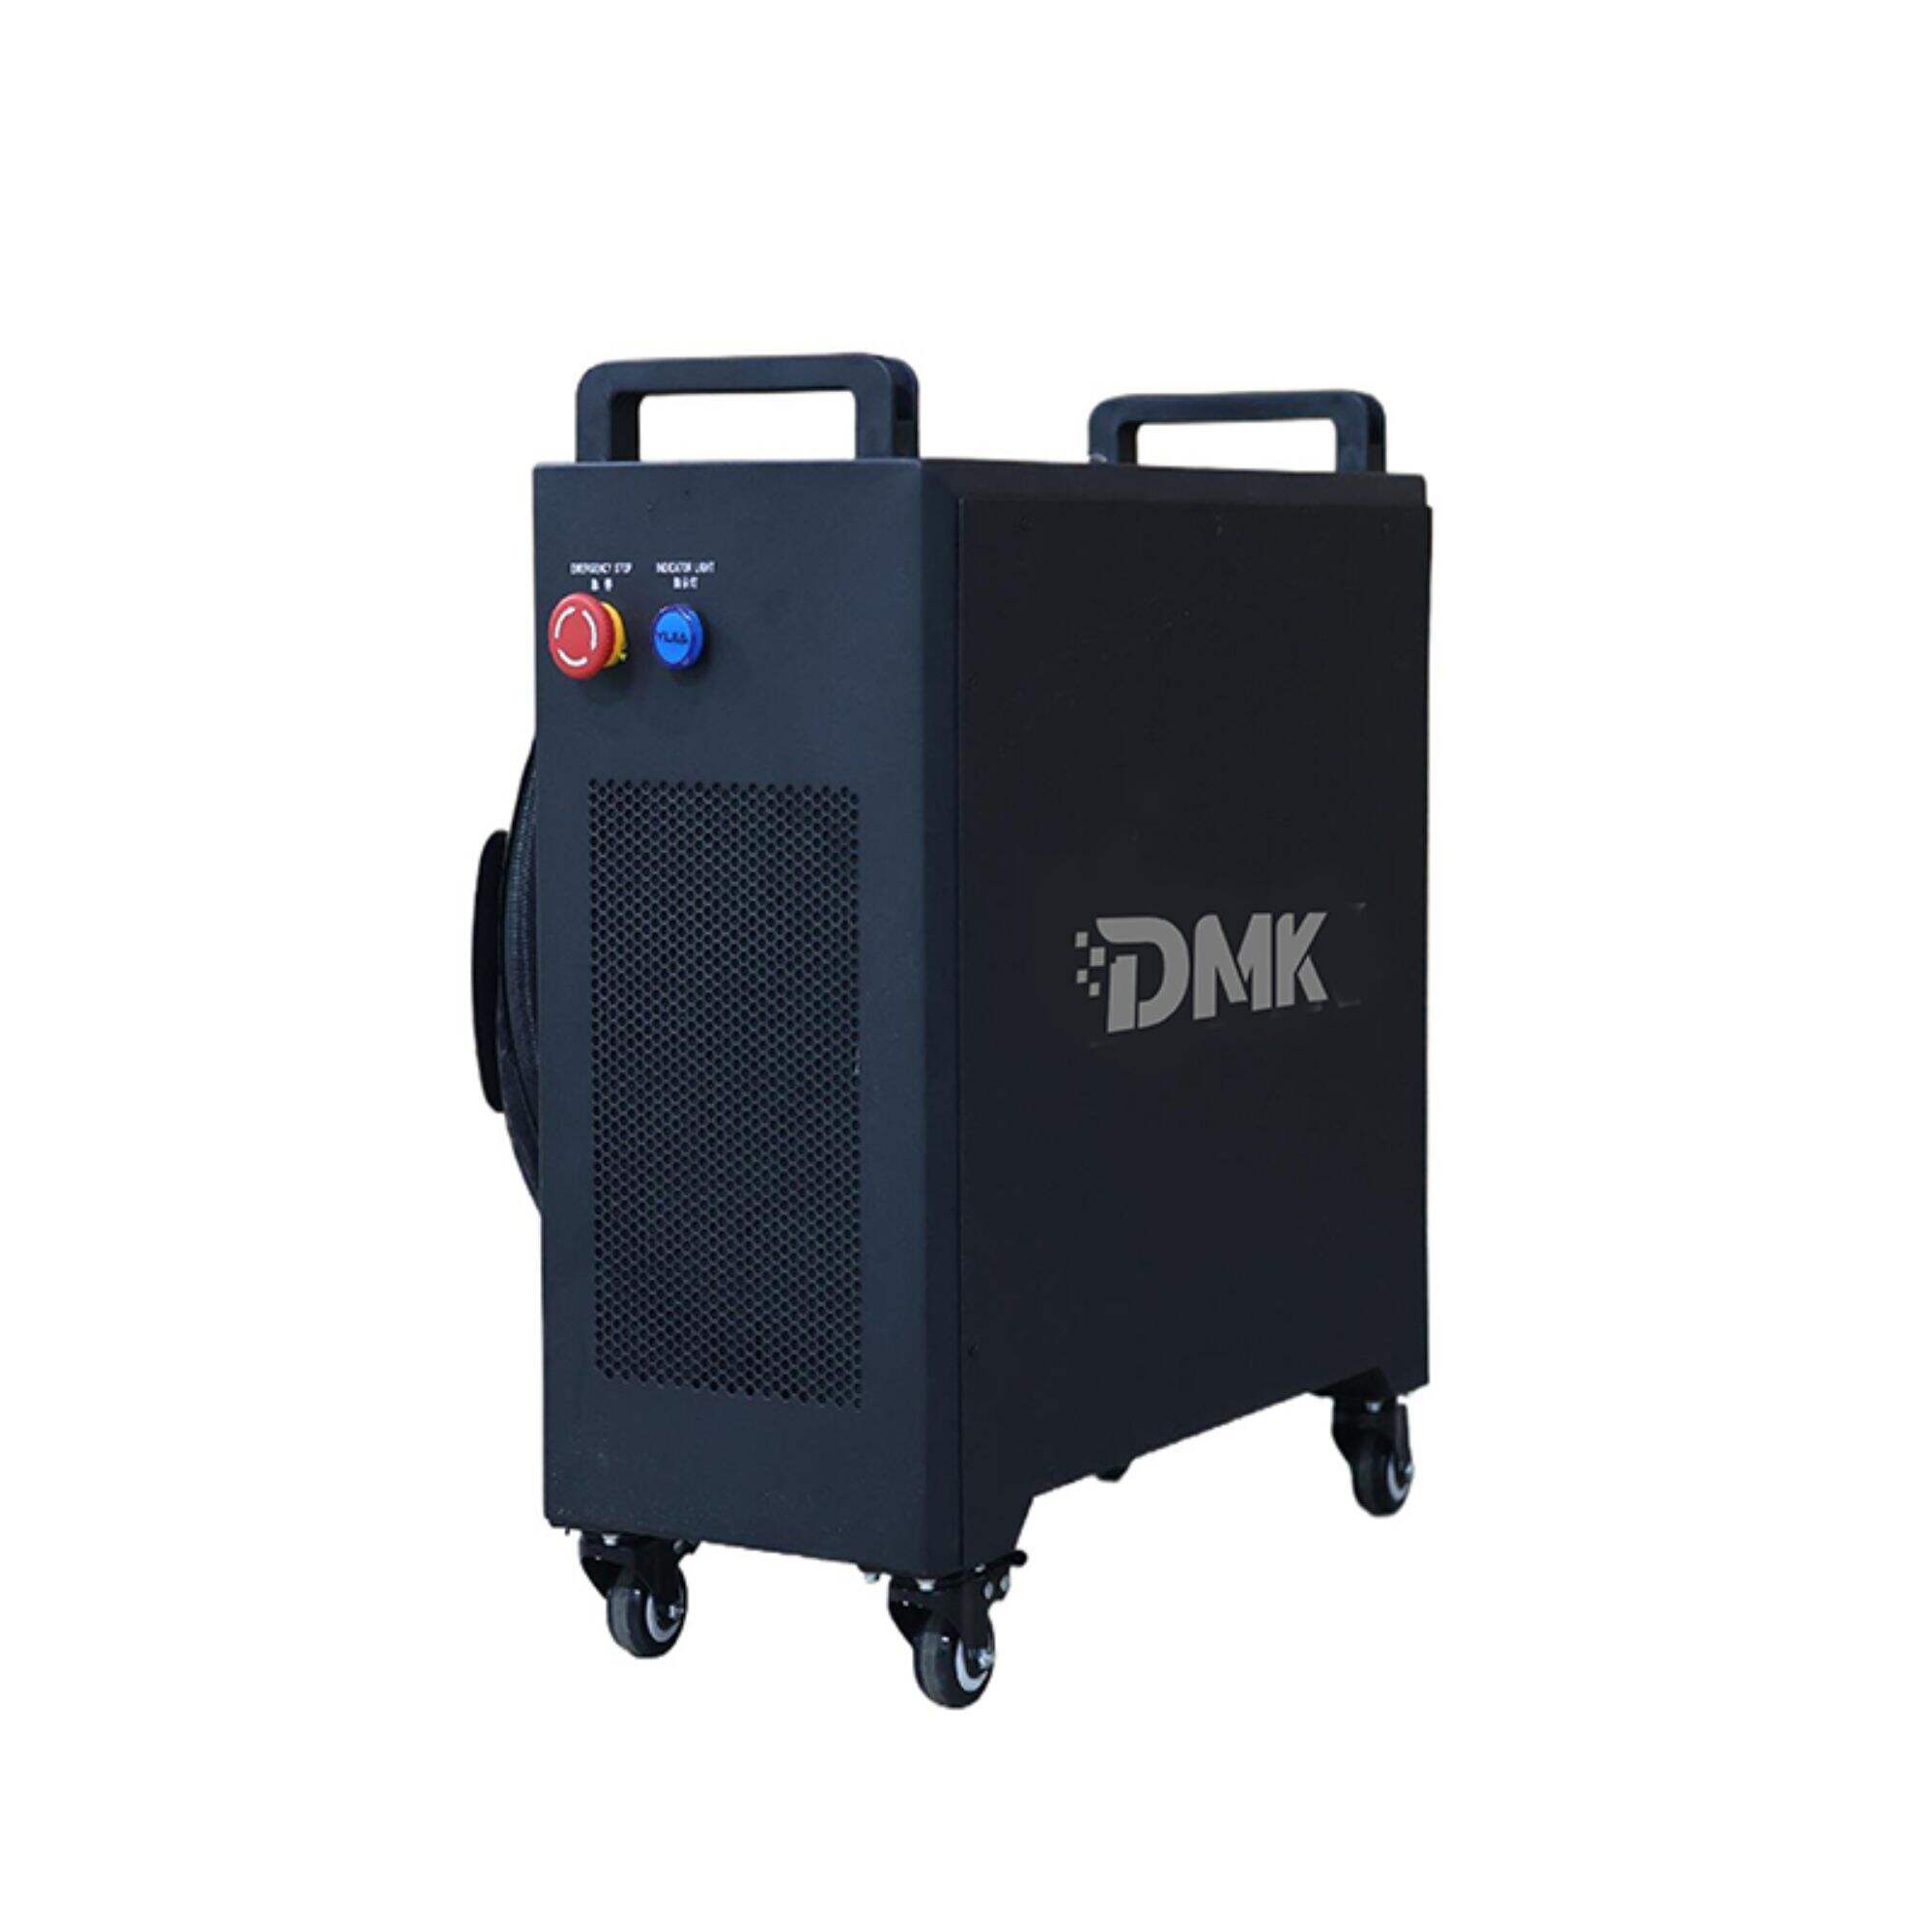 DMK 1500W آلة لحام ألياف الليزر المحمولة المحمولة آلة لحام ليزر صغيرة مبردة بالهواء